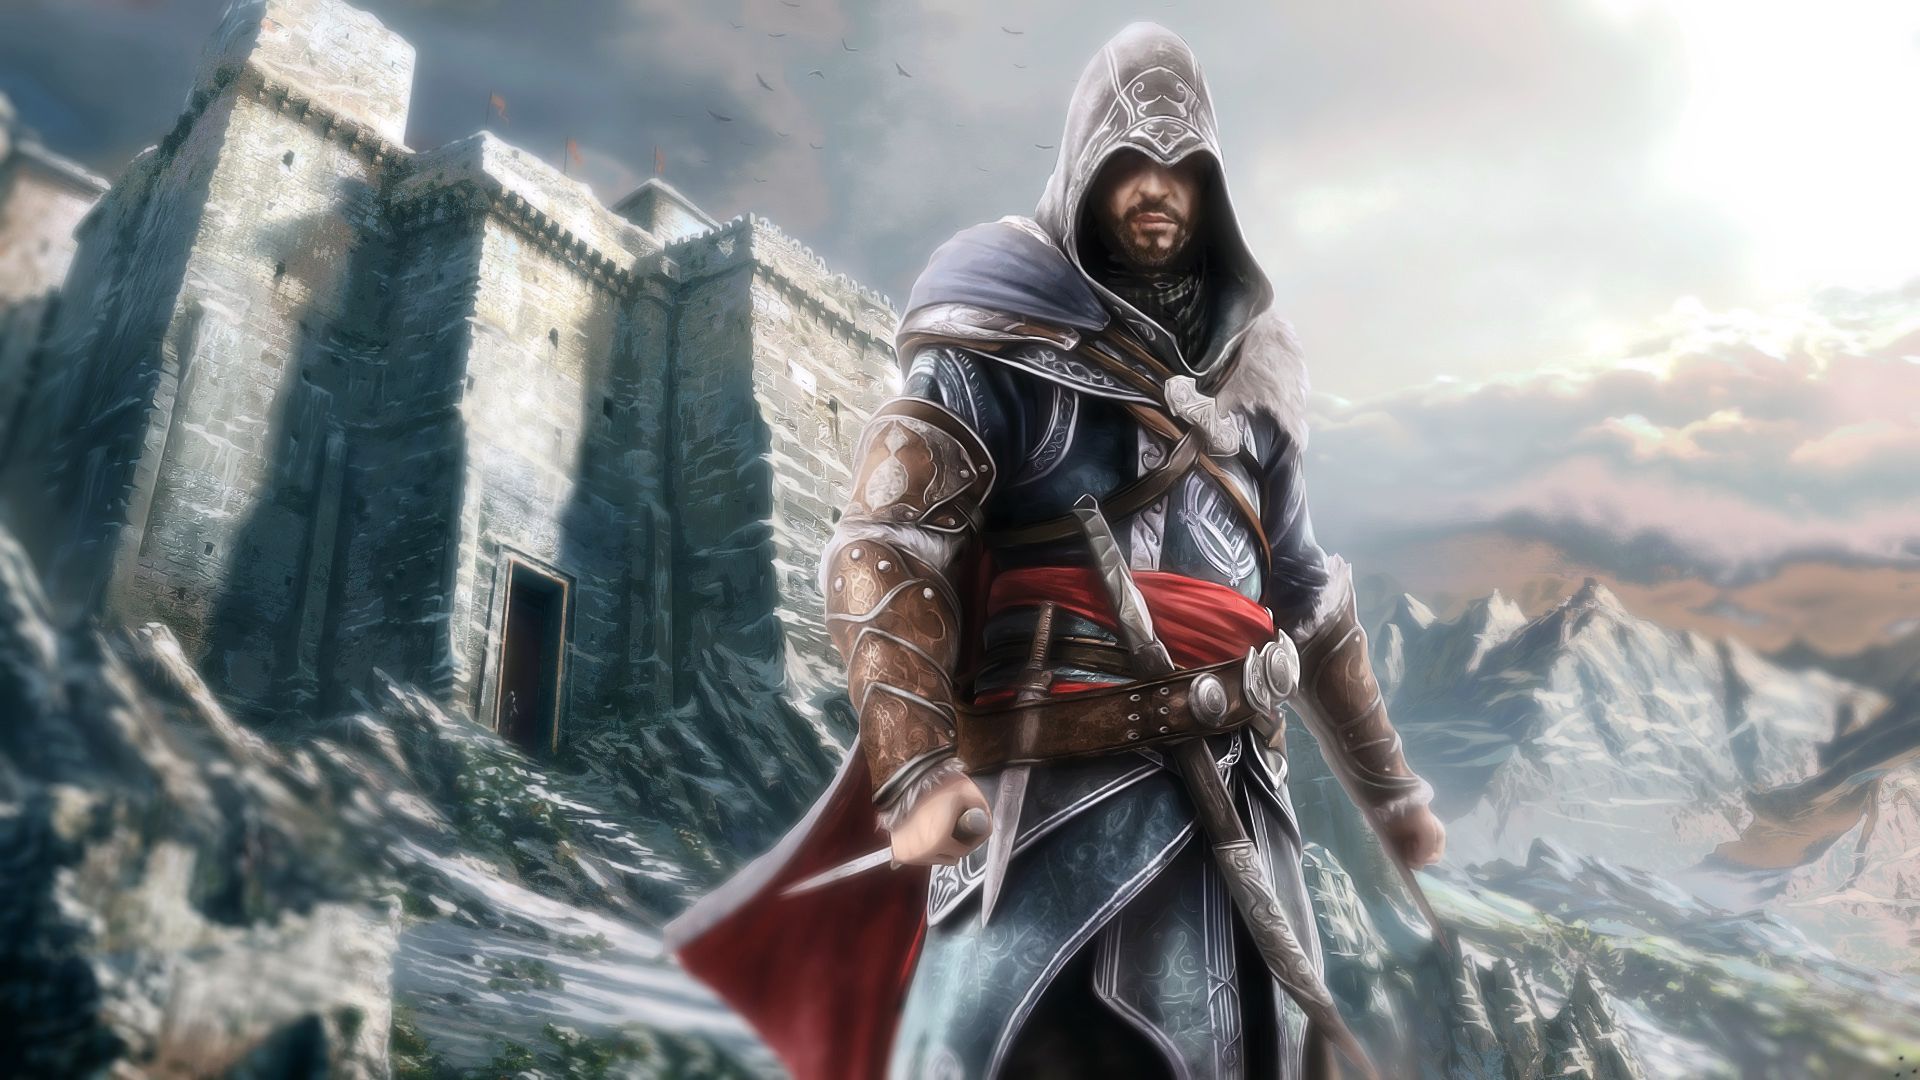 Fondos de Pantalla Assassin's Creed Assassin's Creed: Revelations Juegos  descargar imagenes